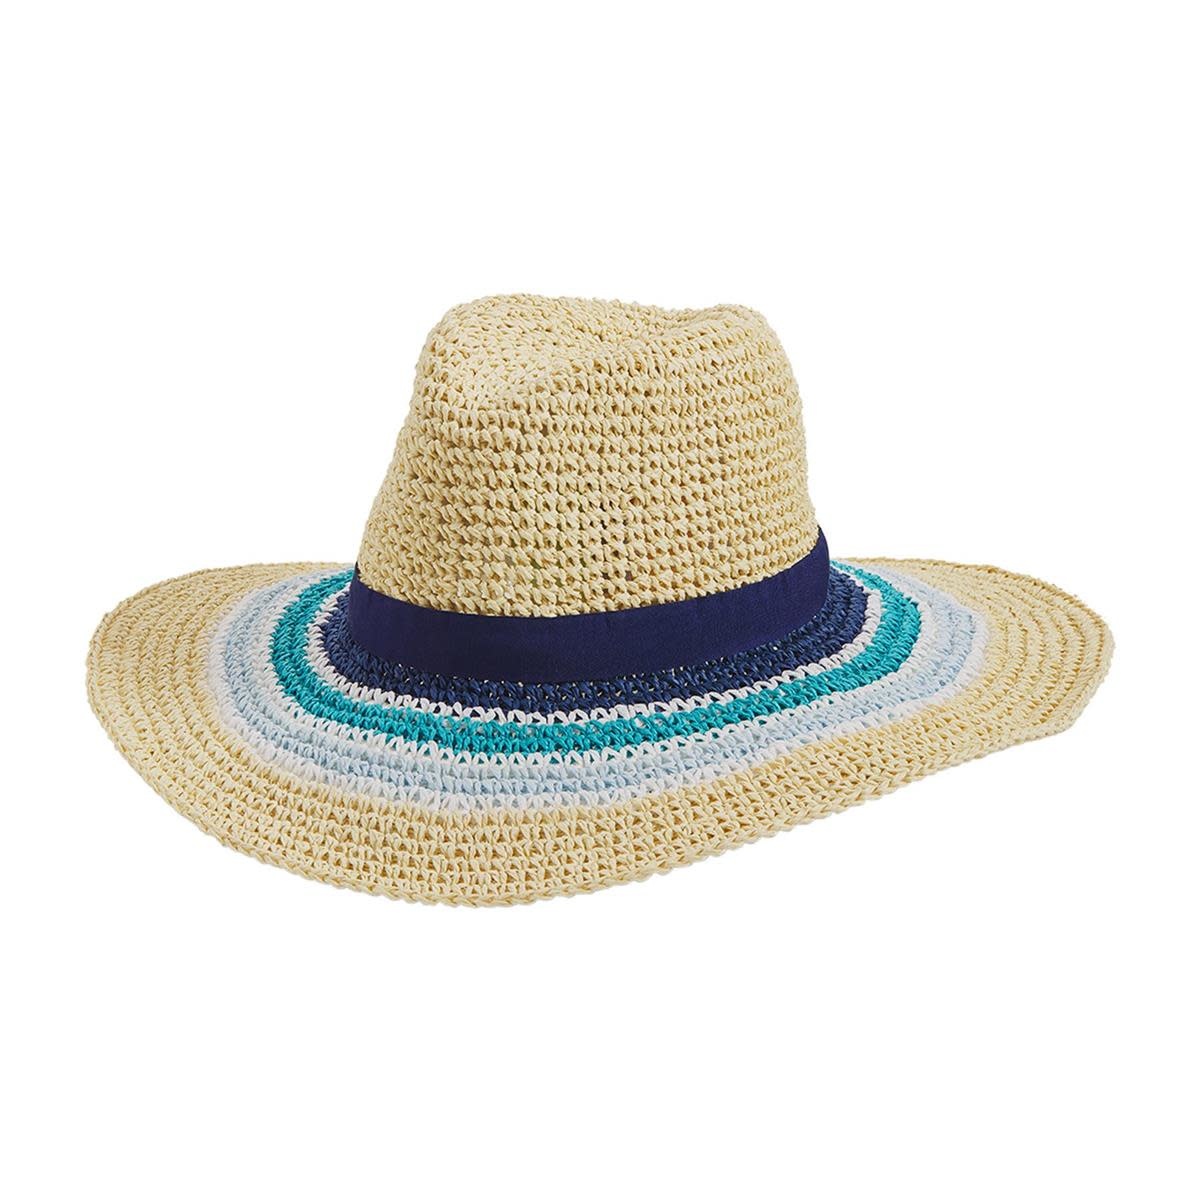 Mud Pie Women's Hats - Striped Straw Fedora Blue - Digs N Gifts